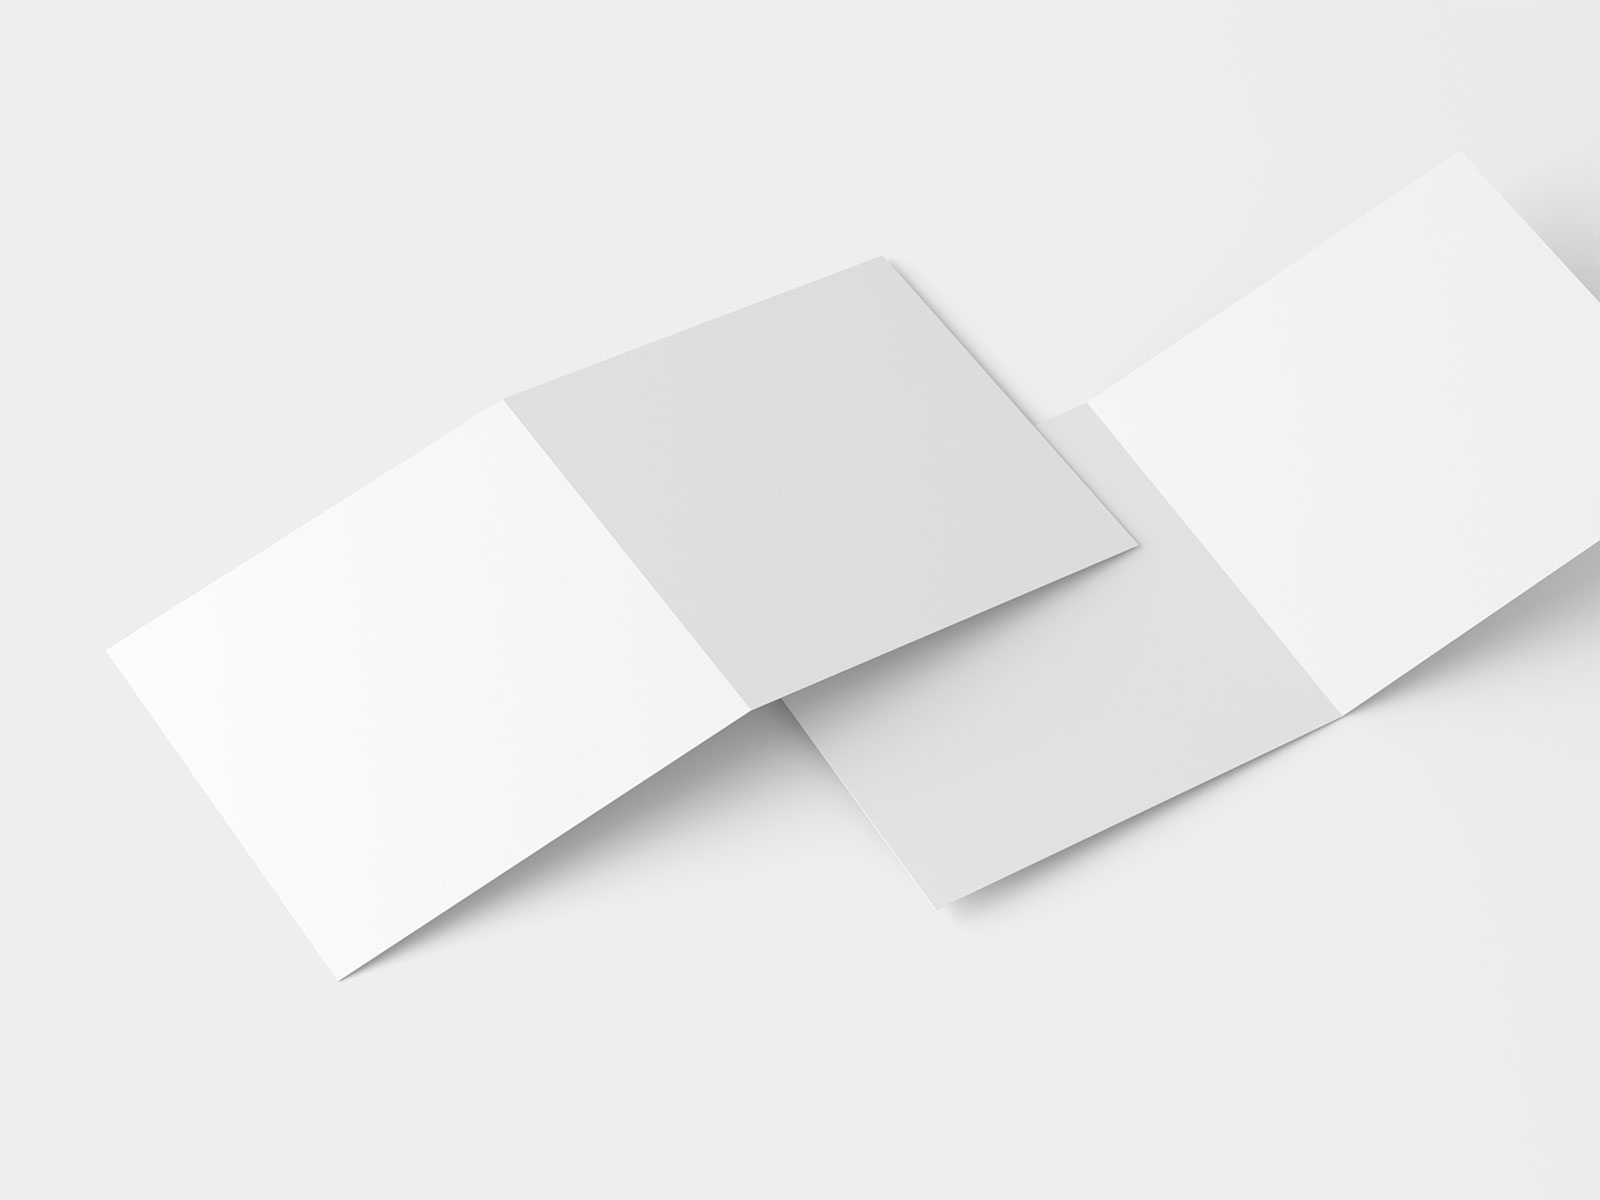 Square Bifold Invitation Card Mockup with Square Envelope PSD